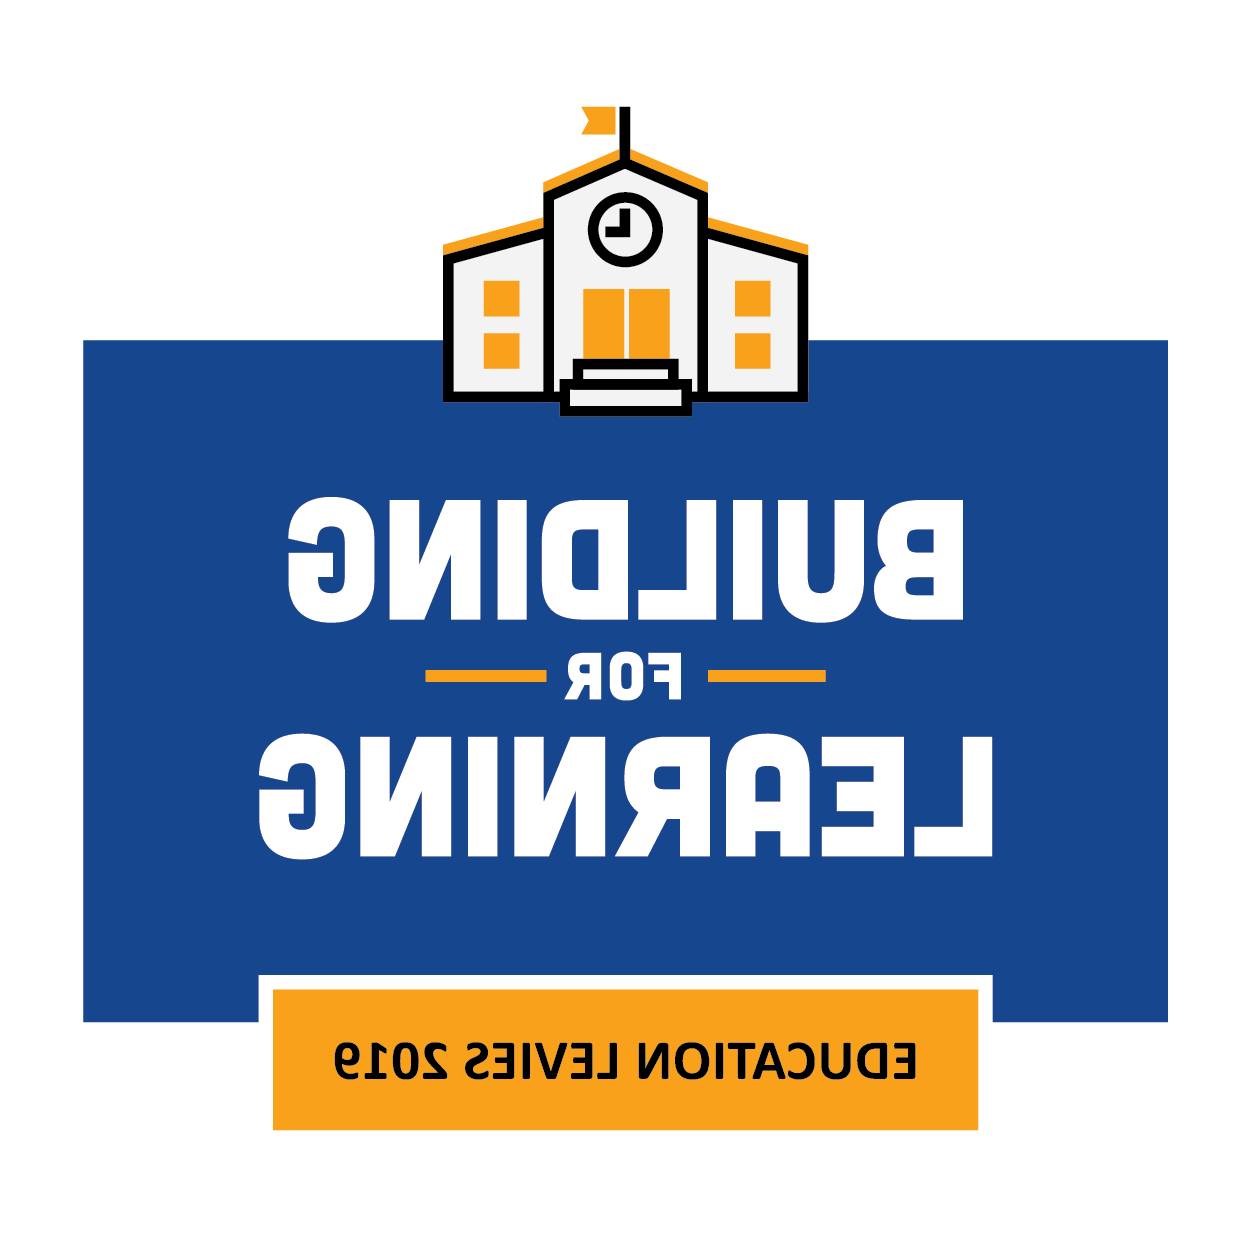 levies 2019 logo